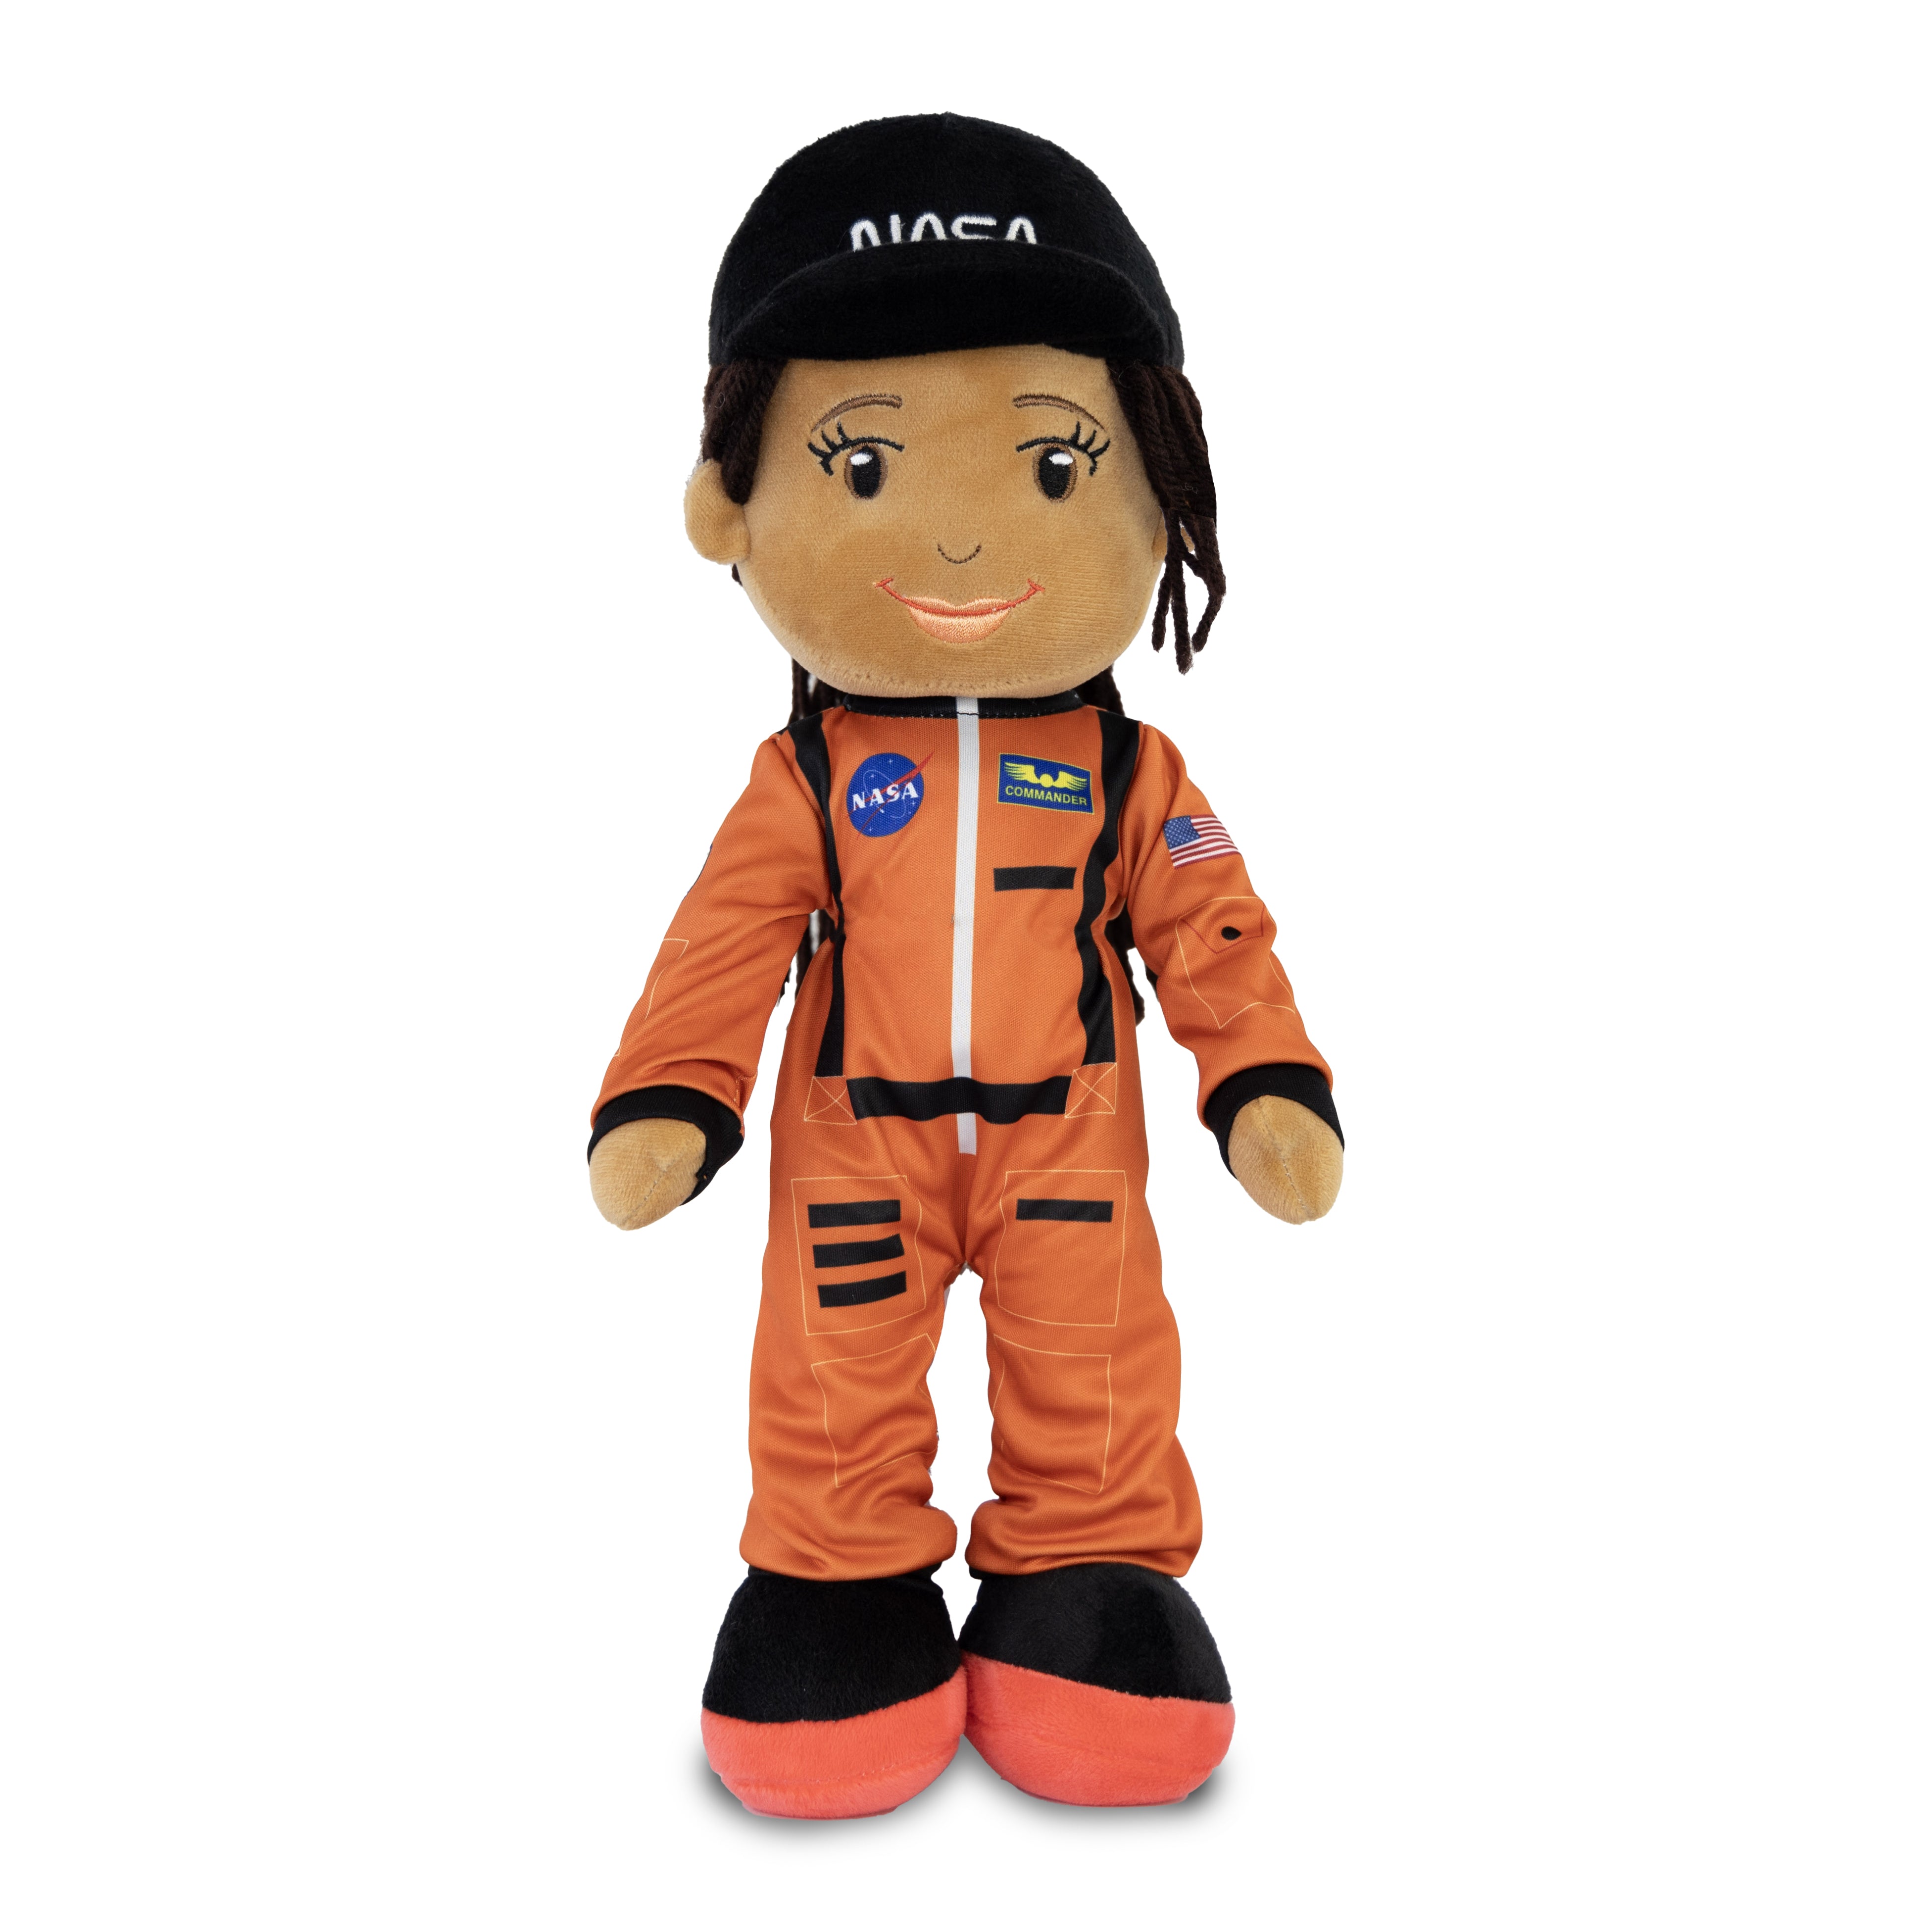 NASA | Astronaut Julie Astronaut 14” Plush Figure